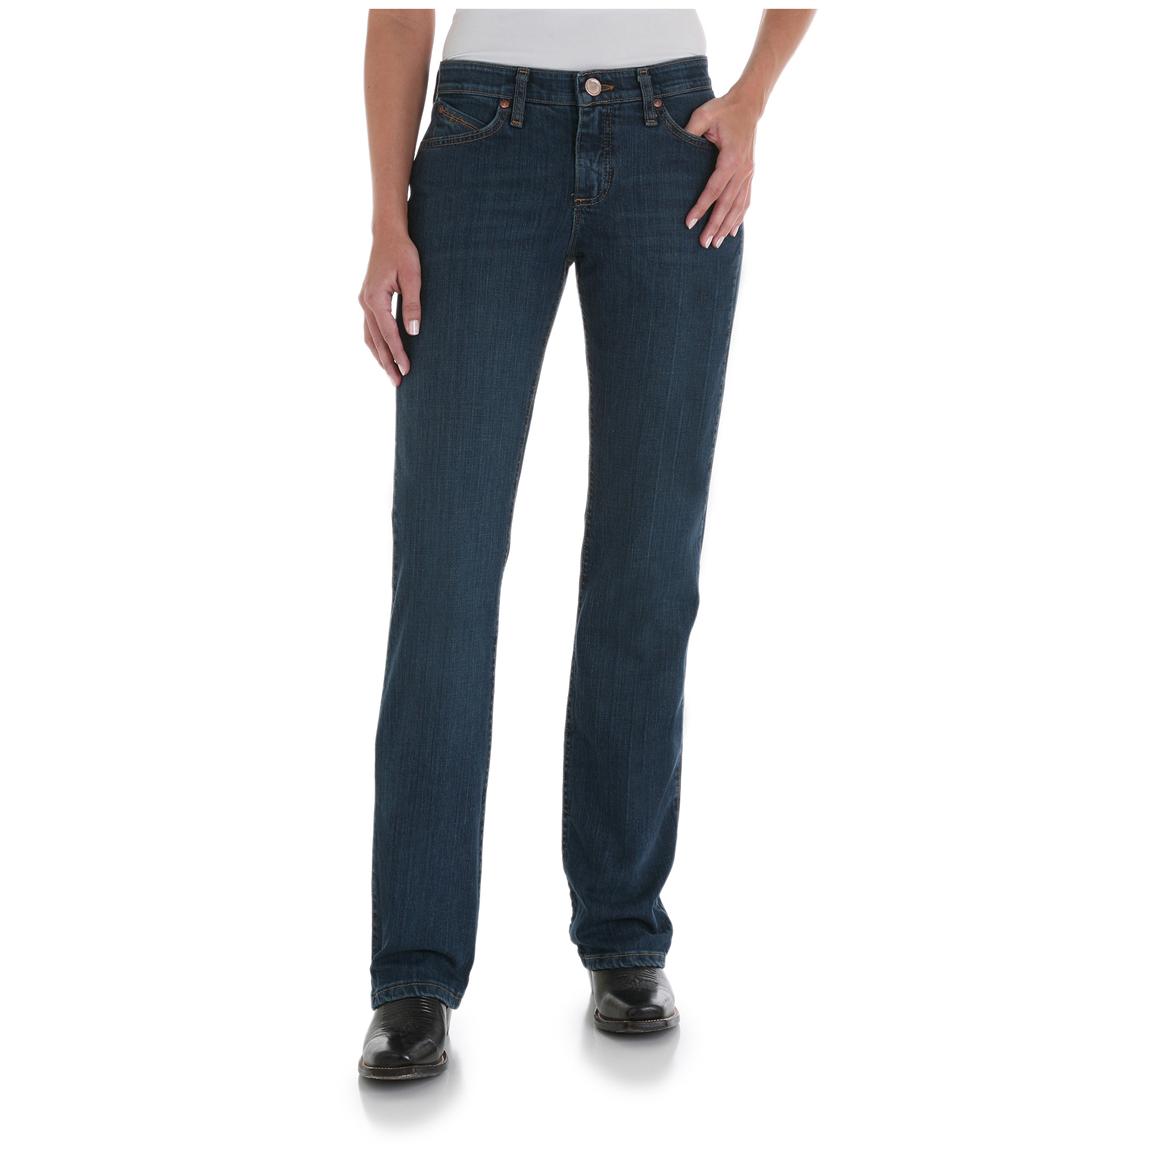 White Sierra Womens Microtek Fleece Pants 31 Inseam Black 657814 Jeans And Pants At